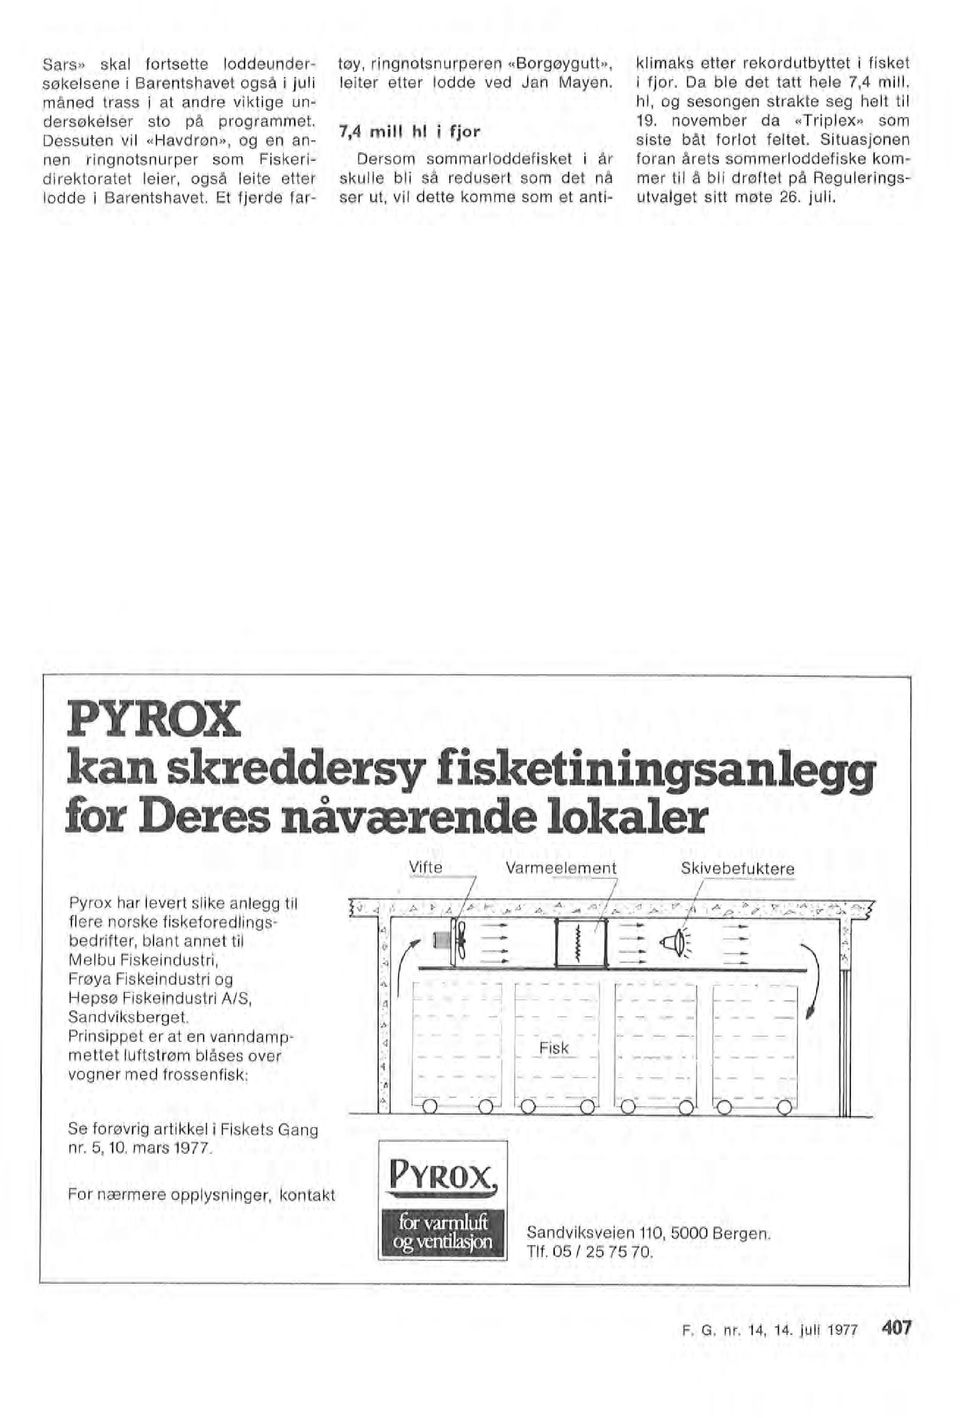 Pyrox har evert sike anegg ti fere norske fiskeforedingsbedrifter, bant annet ti Mebu Fiskeindustri, Frøya Fiskeindustri og Hepsø Fiskeindustri A/S, Sandviksberget.